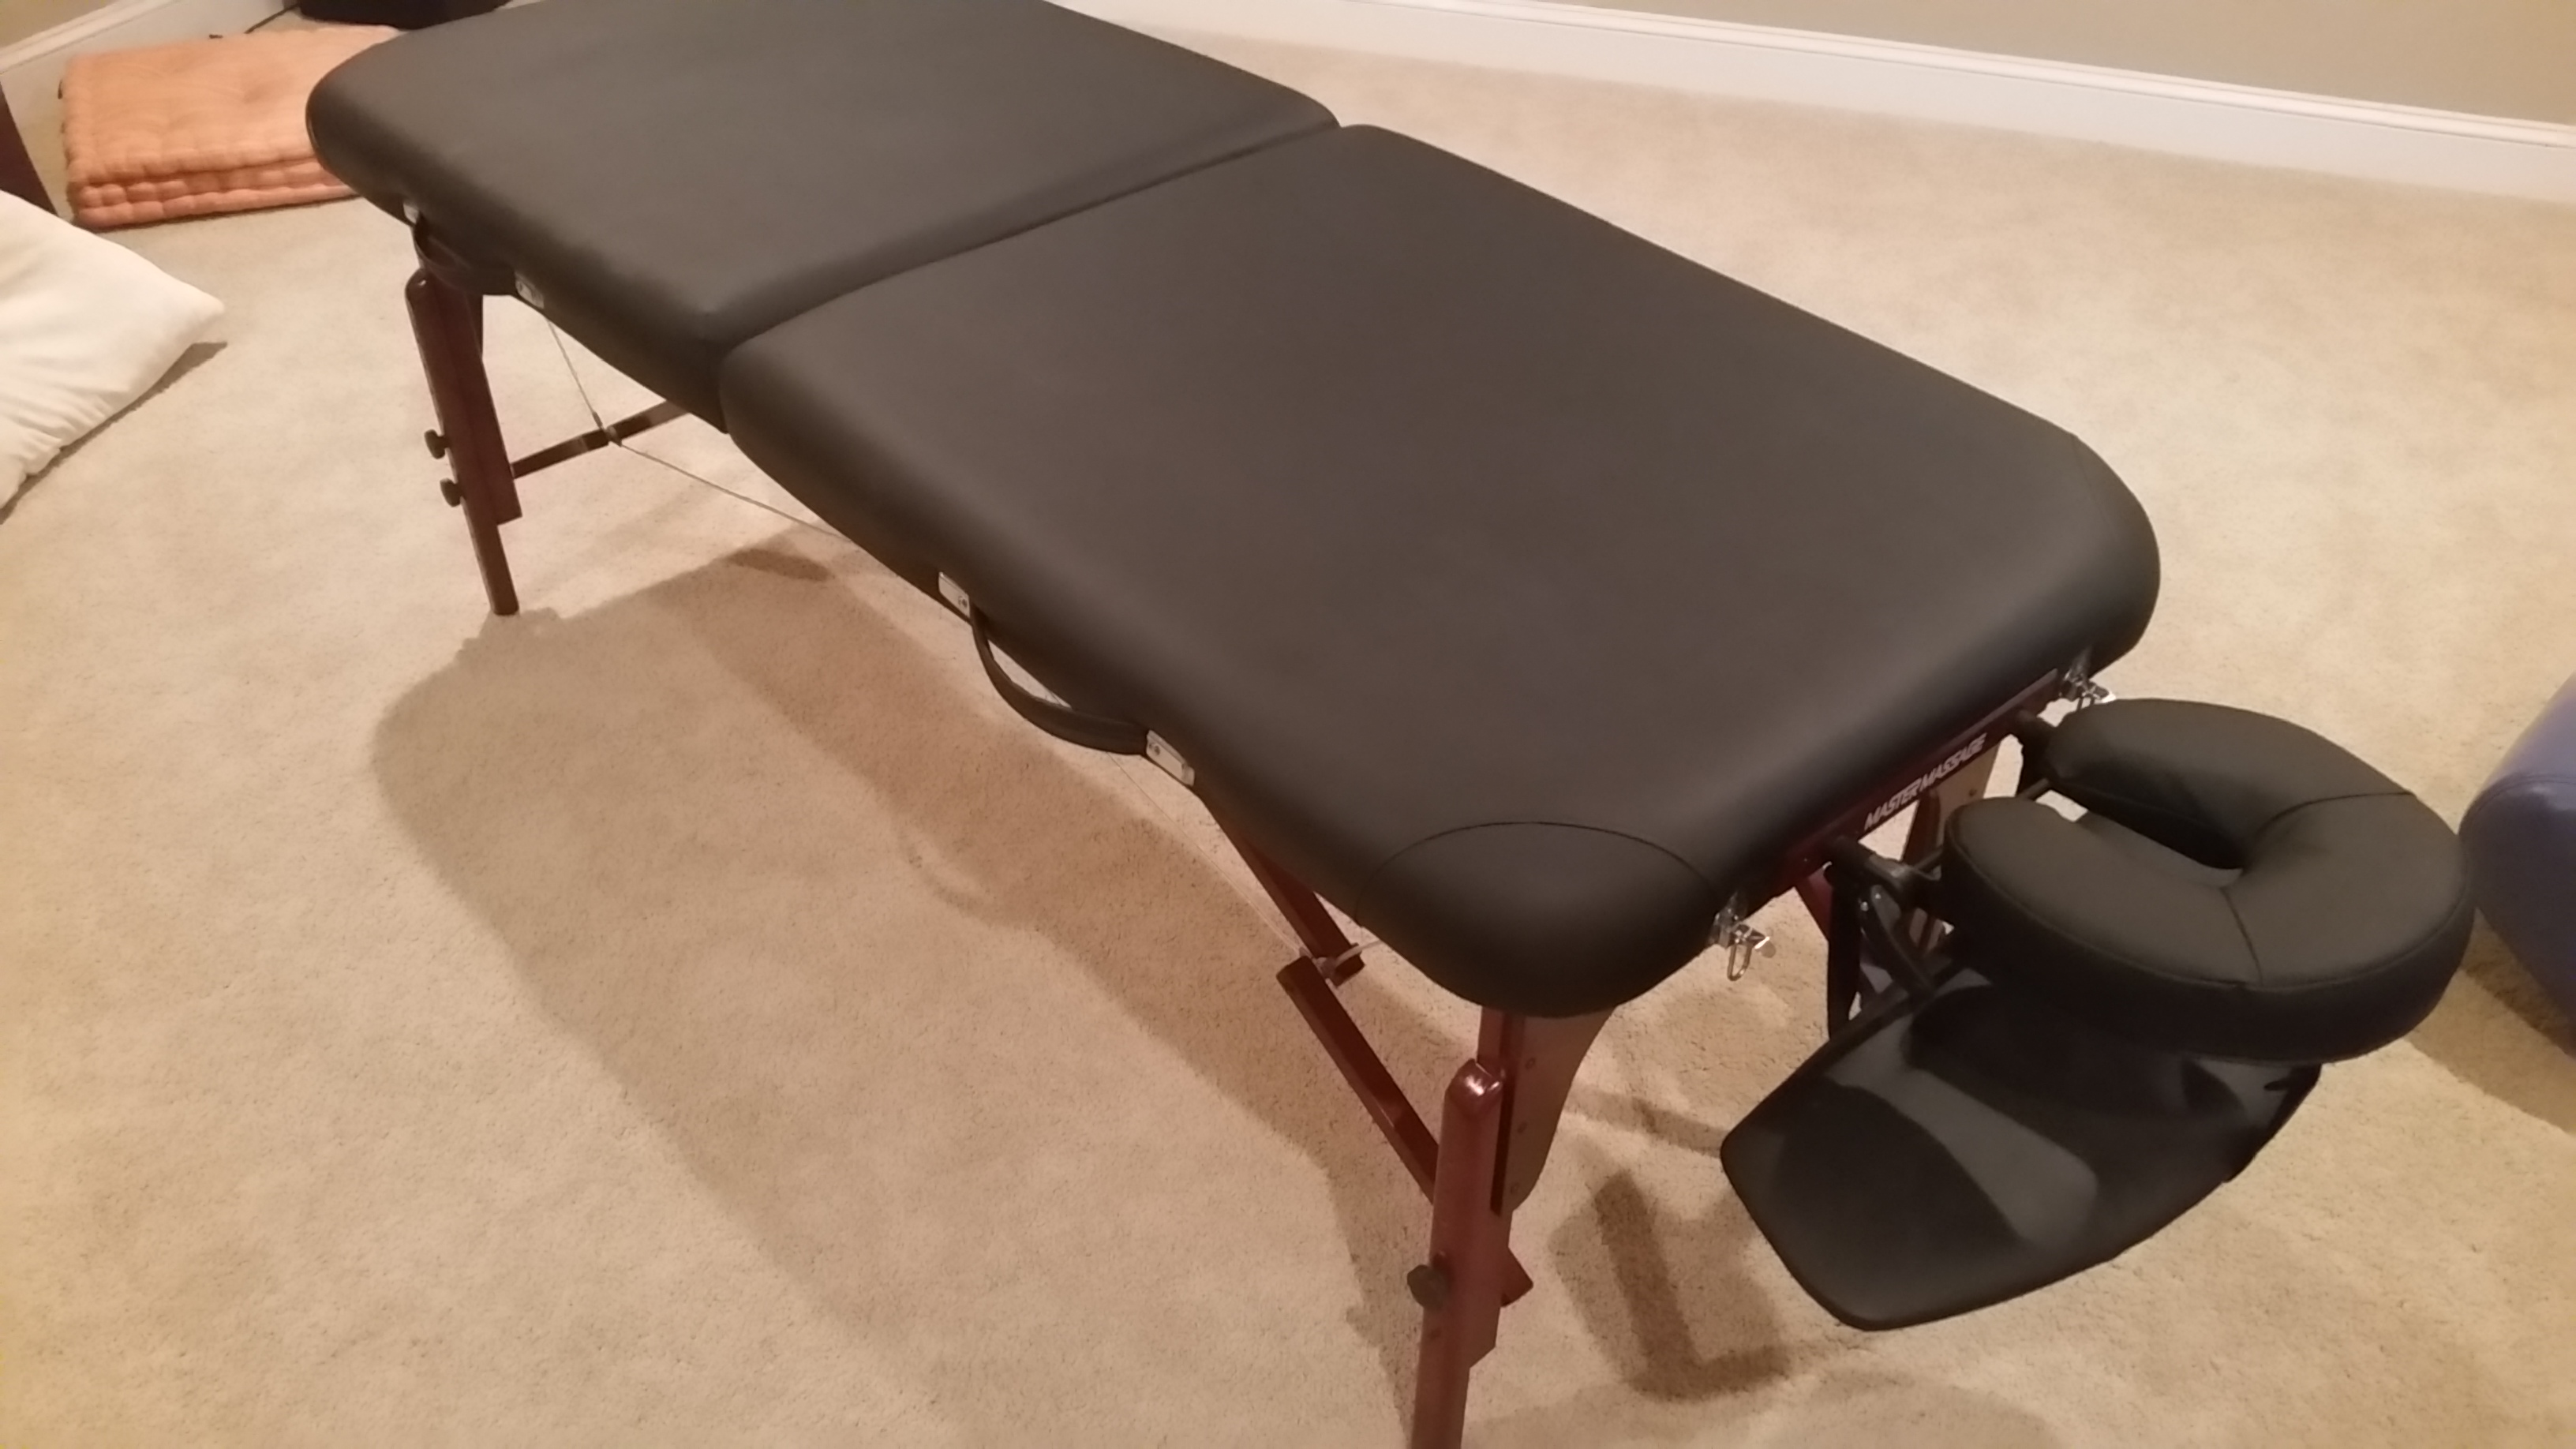 Professional Massage Table for sale in Smyrna GA